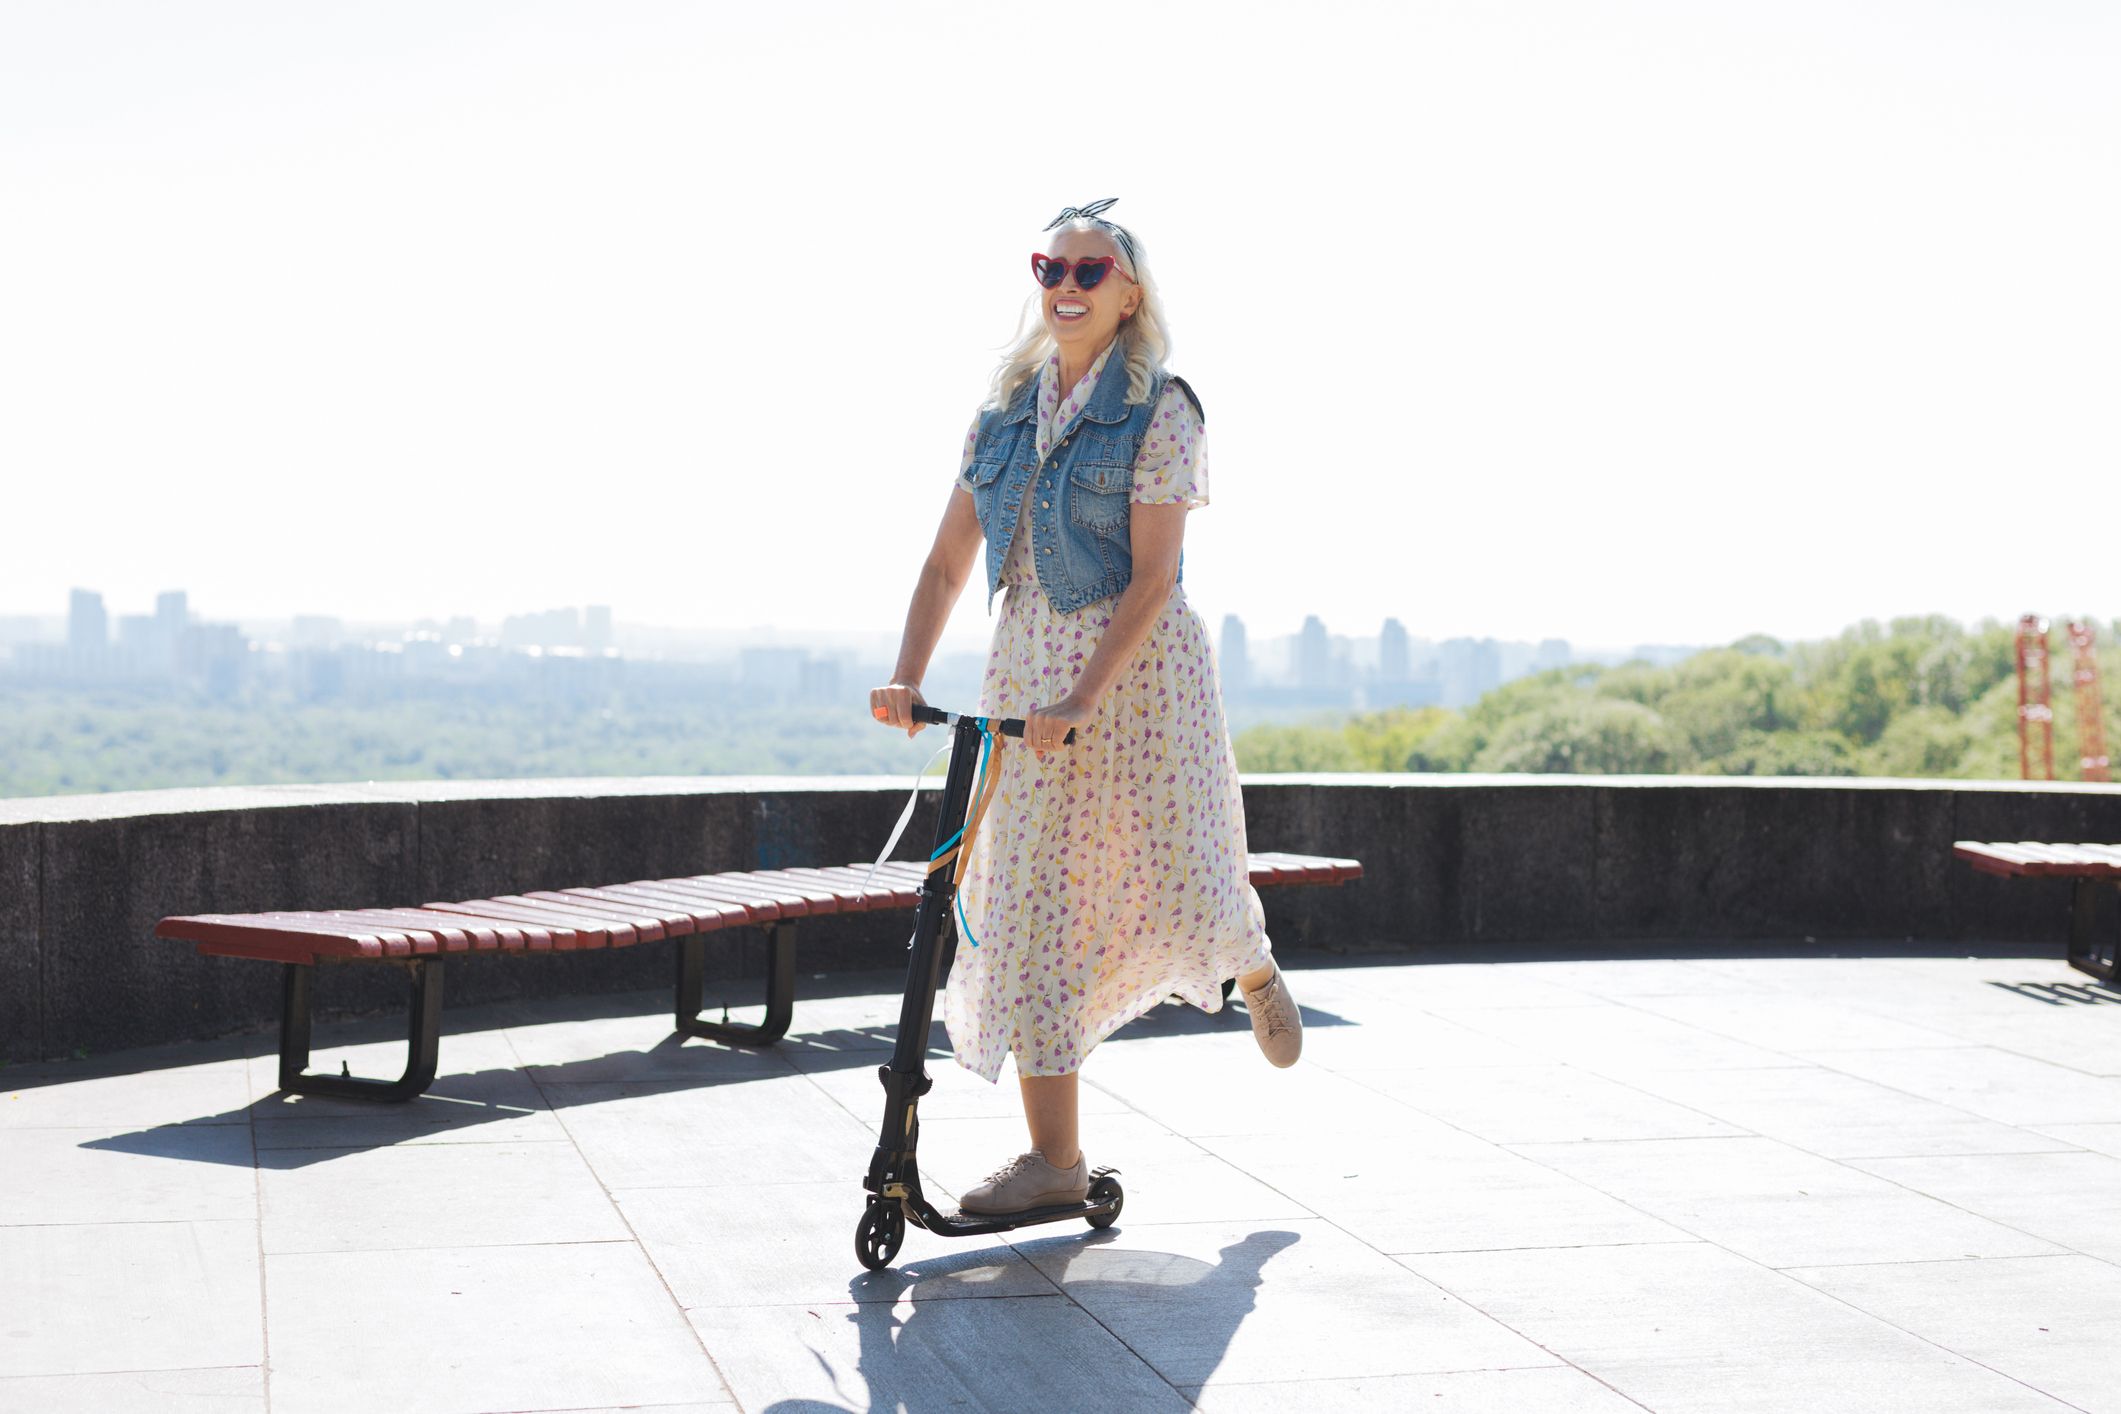 An older woman uses a Bird-like scooter on a sidewalk.